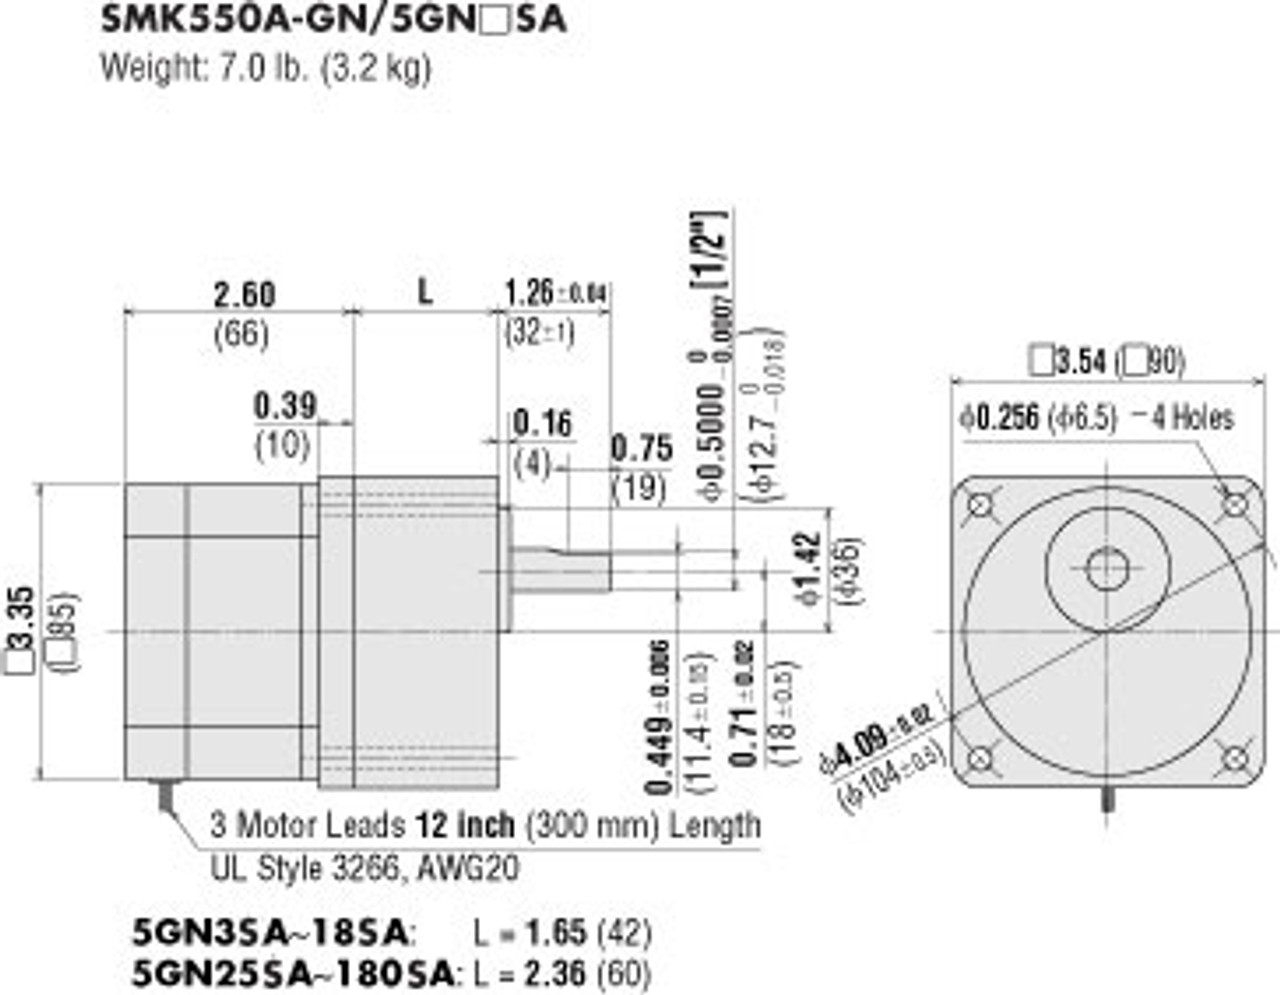 SMK550A-GN / 5GN30SA - Dimensions